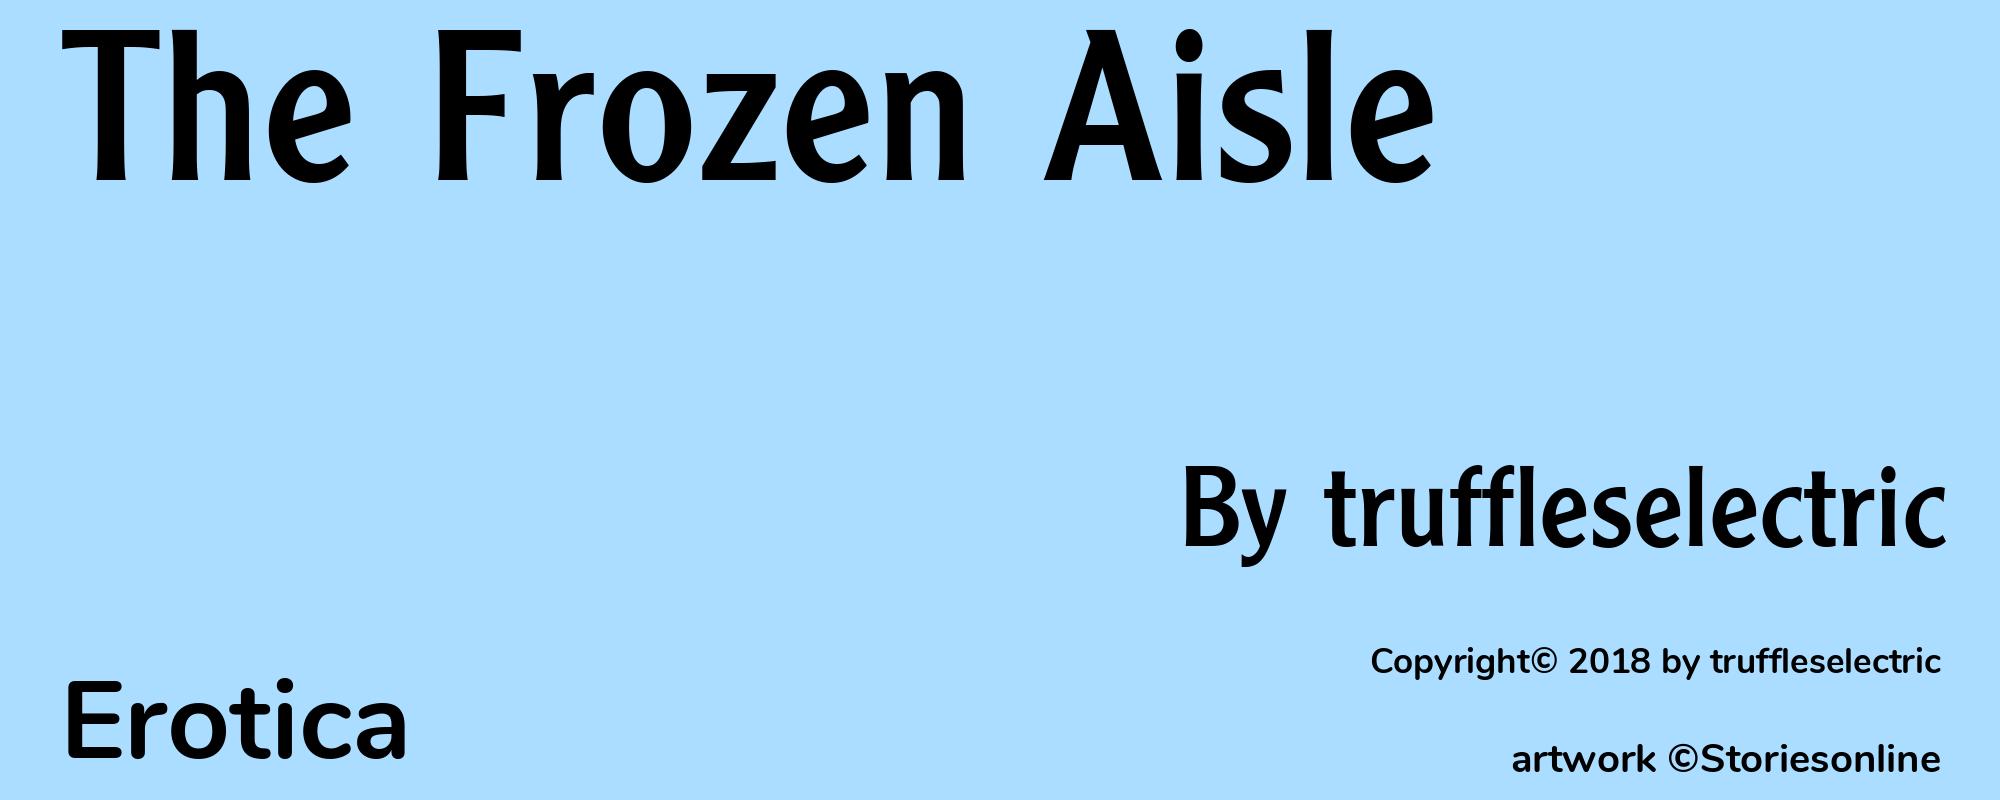 The Frozen Aisle - Cover